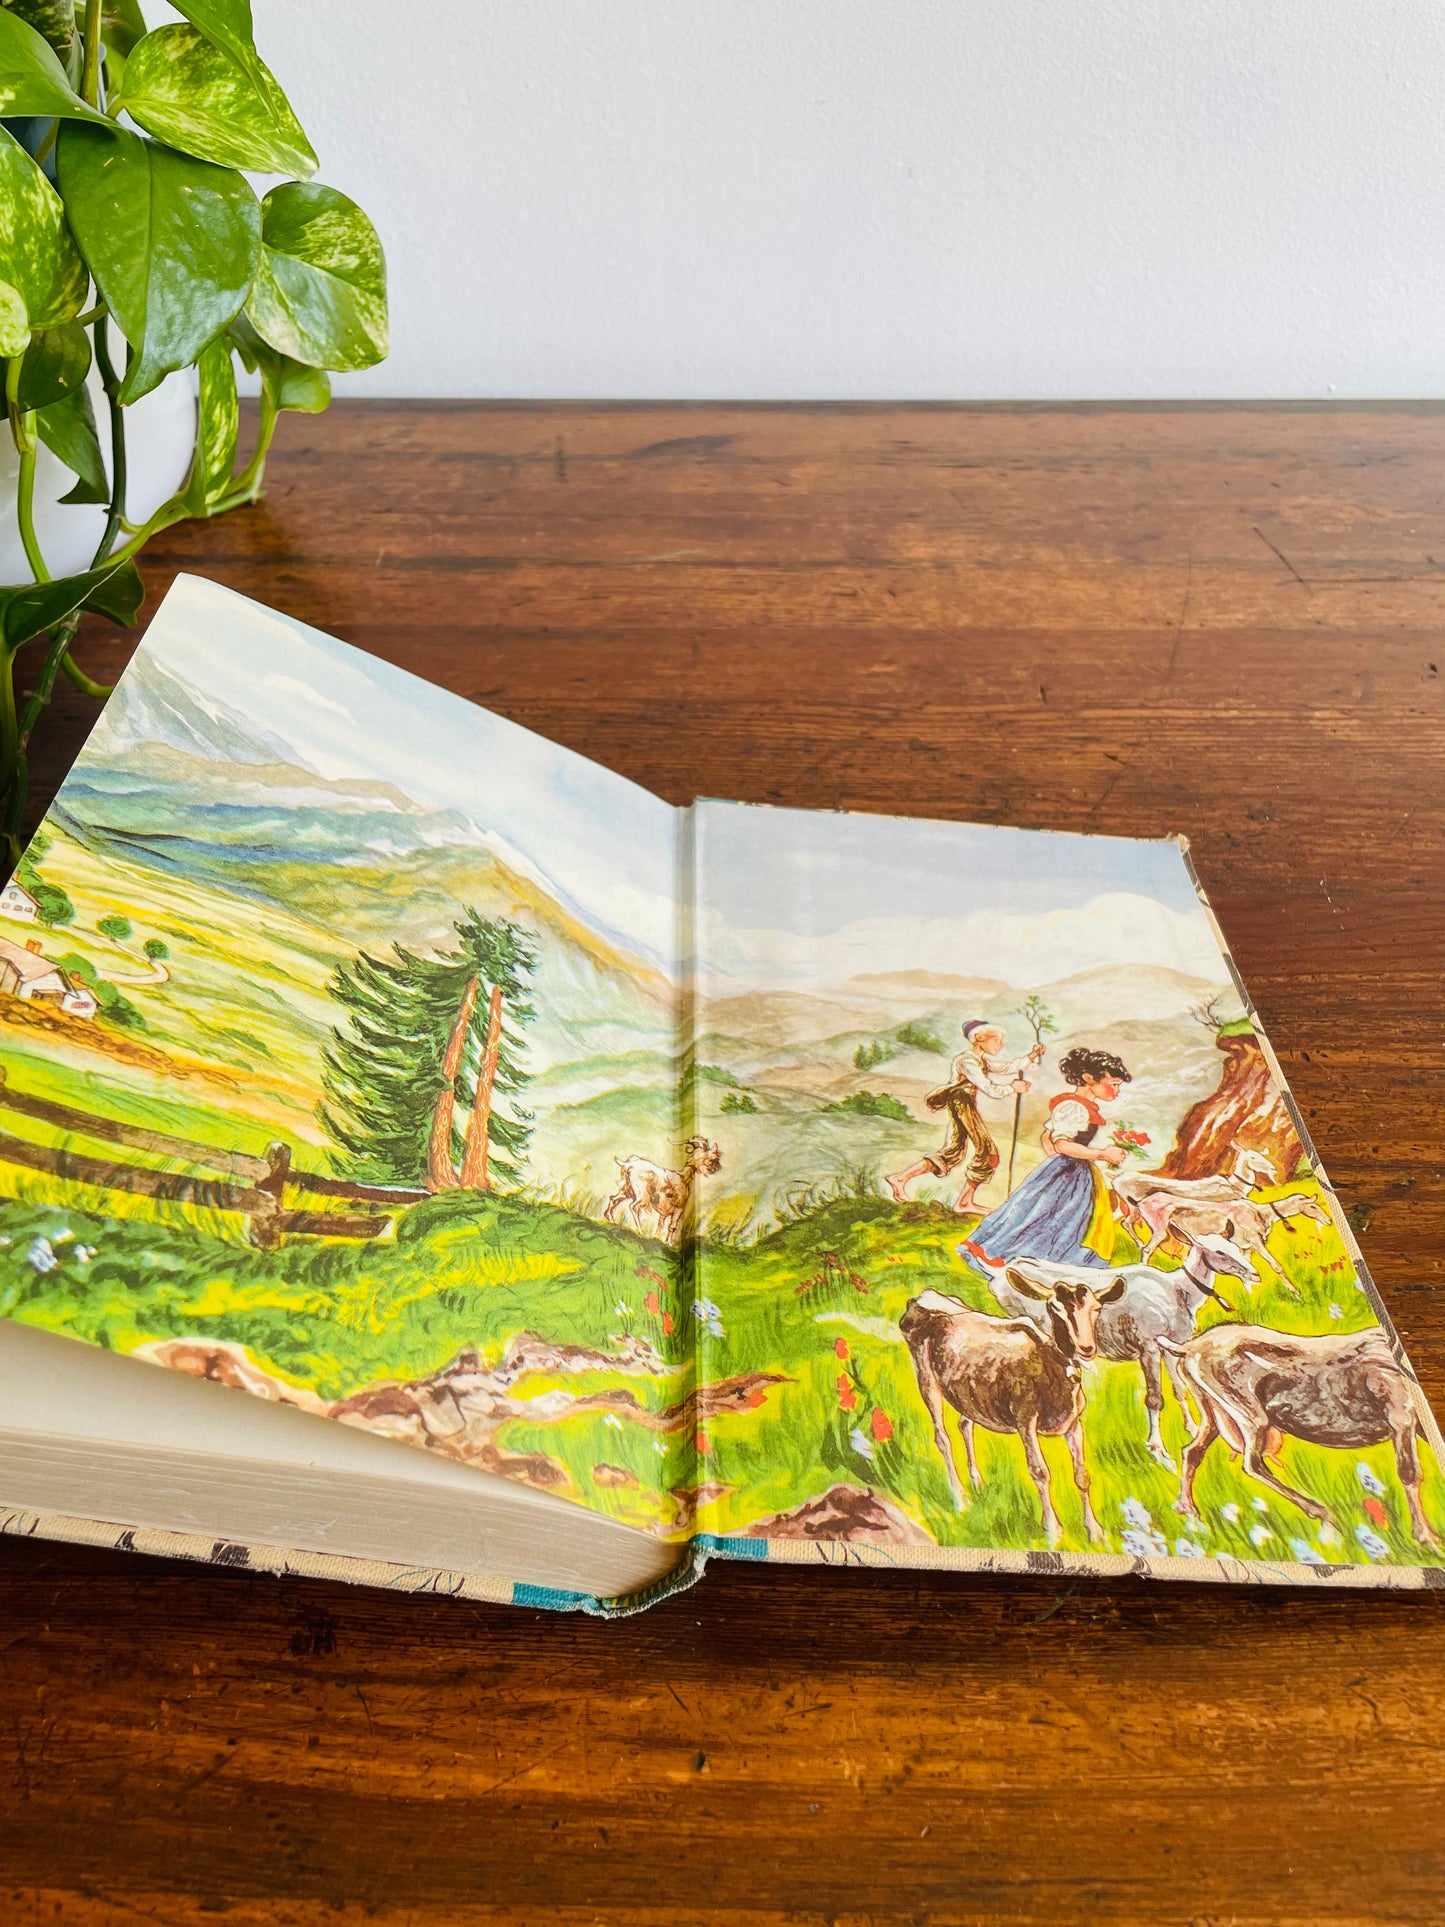 Heidi by Johanna Spyri Clothbound Hardcover Book - Illustrated by William Sharp - Junior Library Edition (1945)